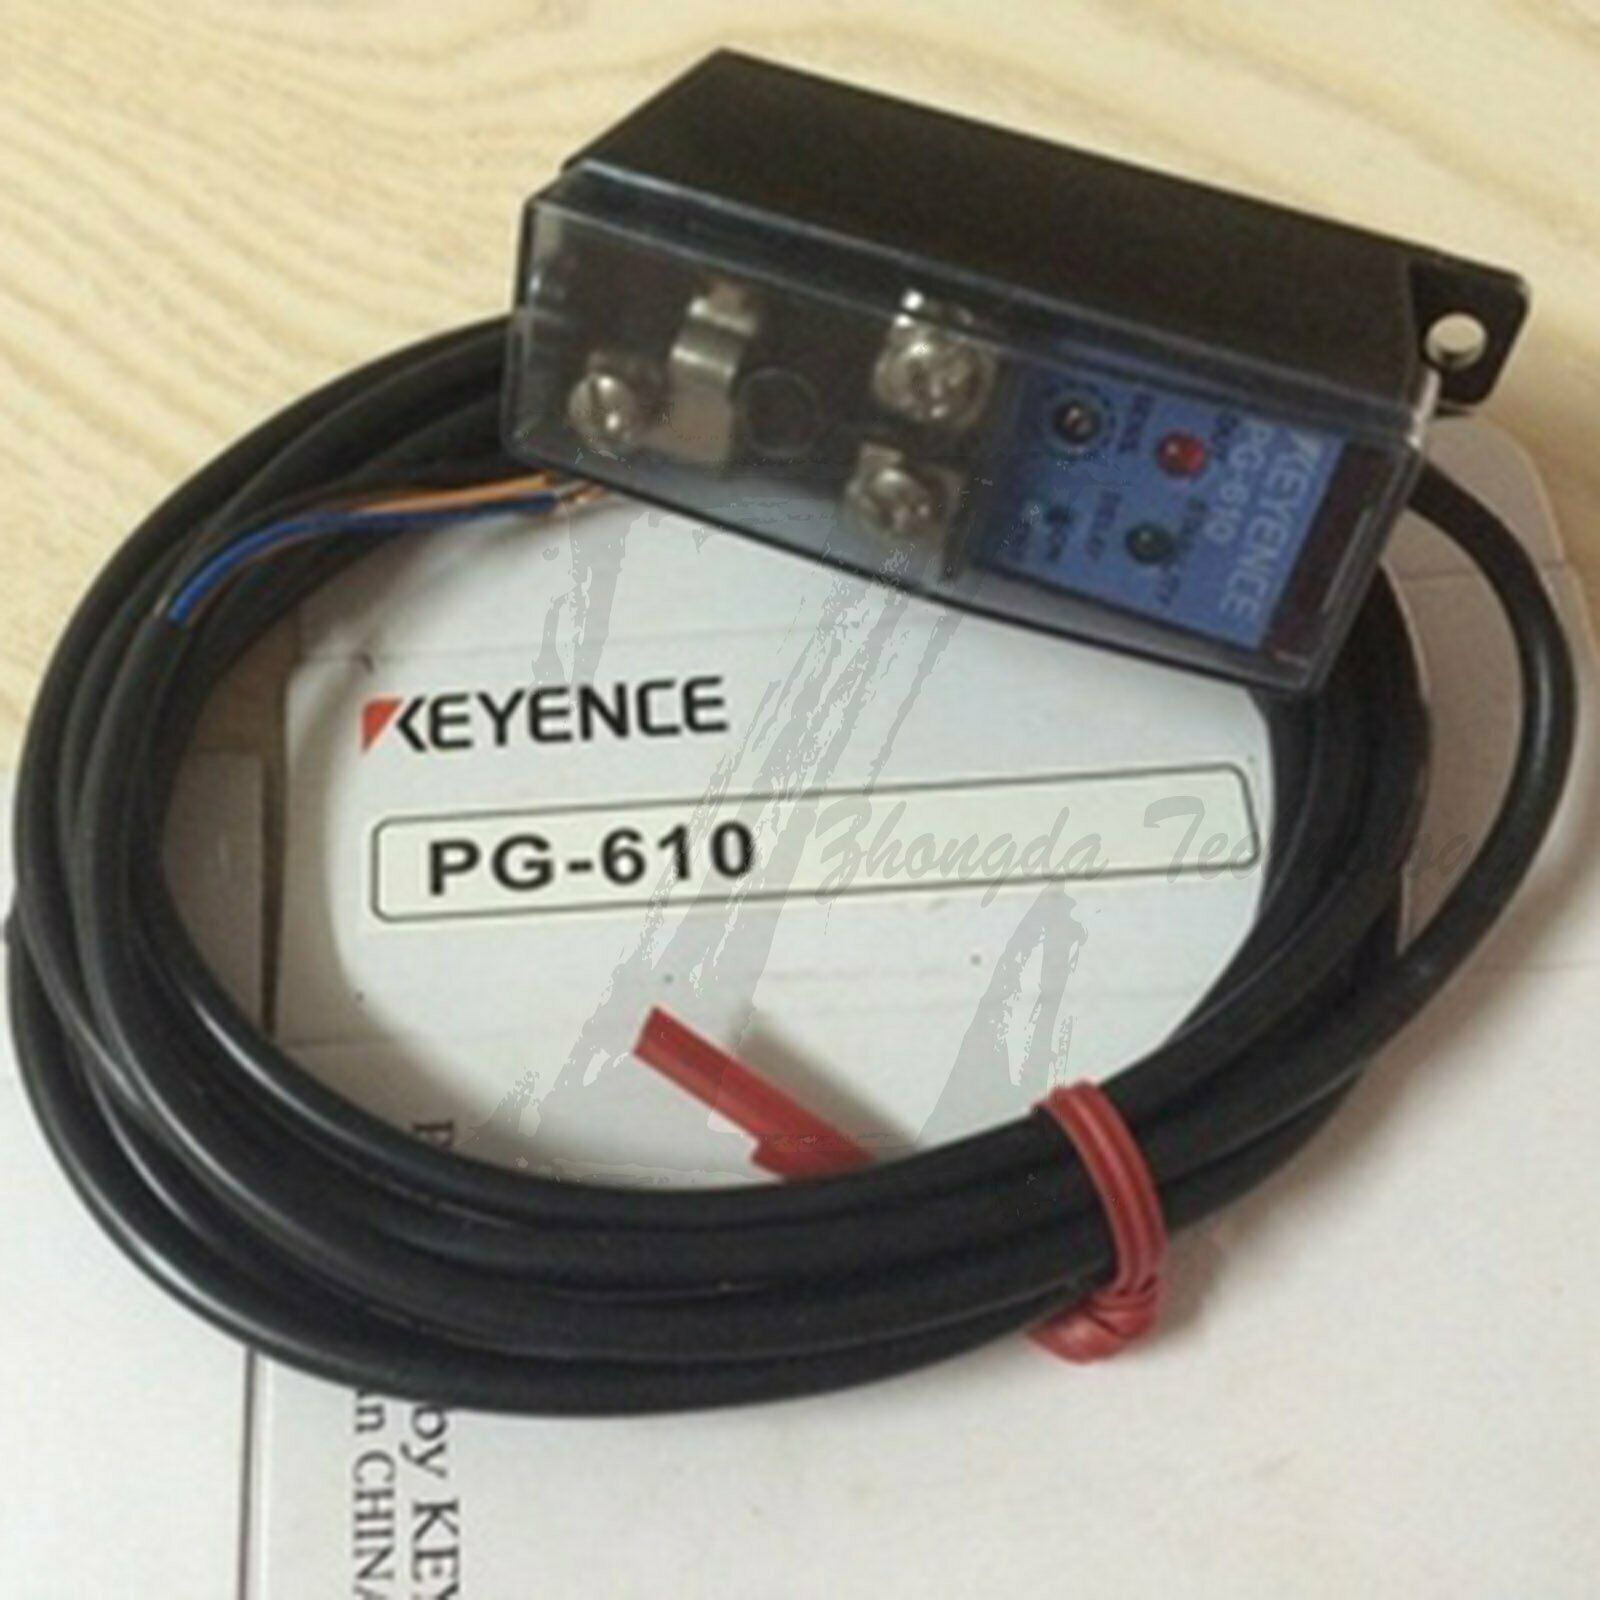 1pcs NEW KEYENCE PG-610 Photoelectric Sensors KOEED 201-500, 90%, import_2020_10_10_031751, Keyence, Other, validate-product-description